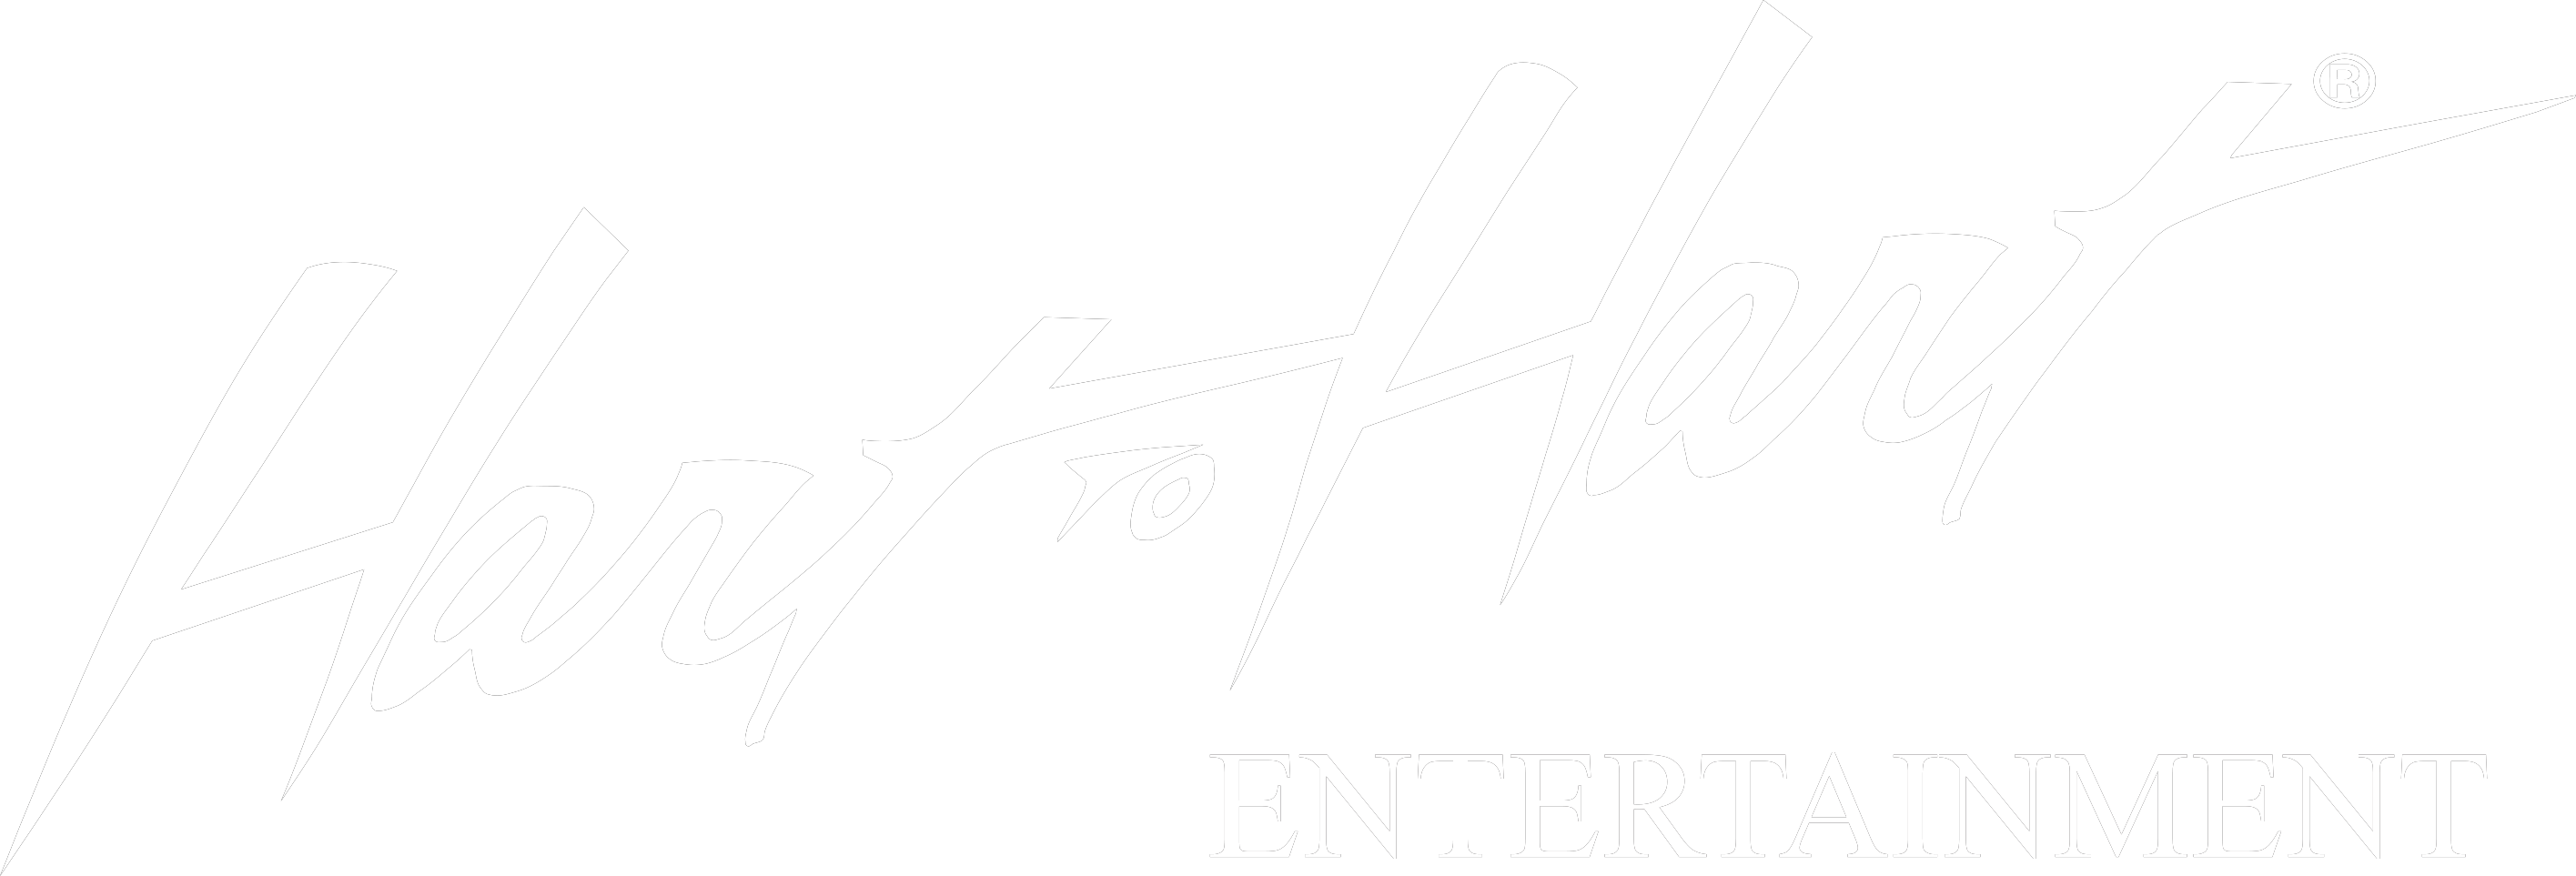 Hart Logo - Hart To Hart Logo White to Hart